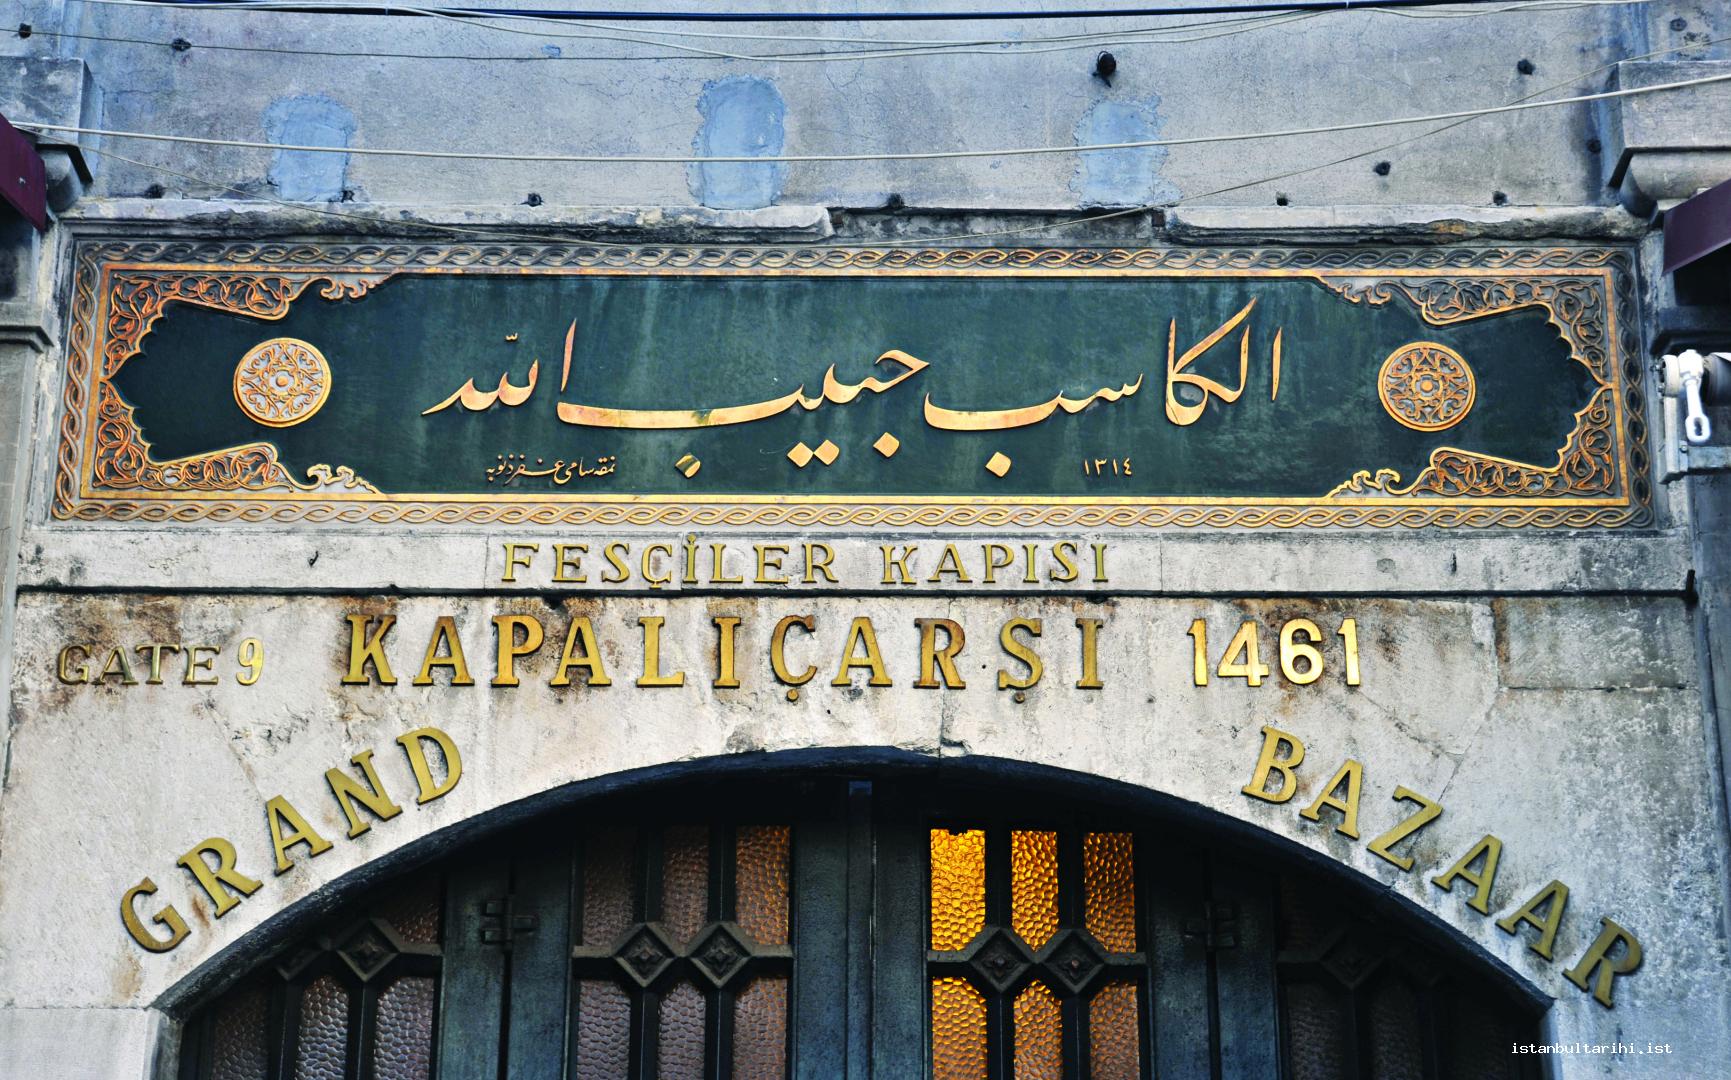 19- Fesçiler Gate of Grand Bazaar (Calligrapher Sami Efendi)